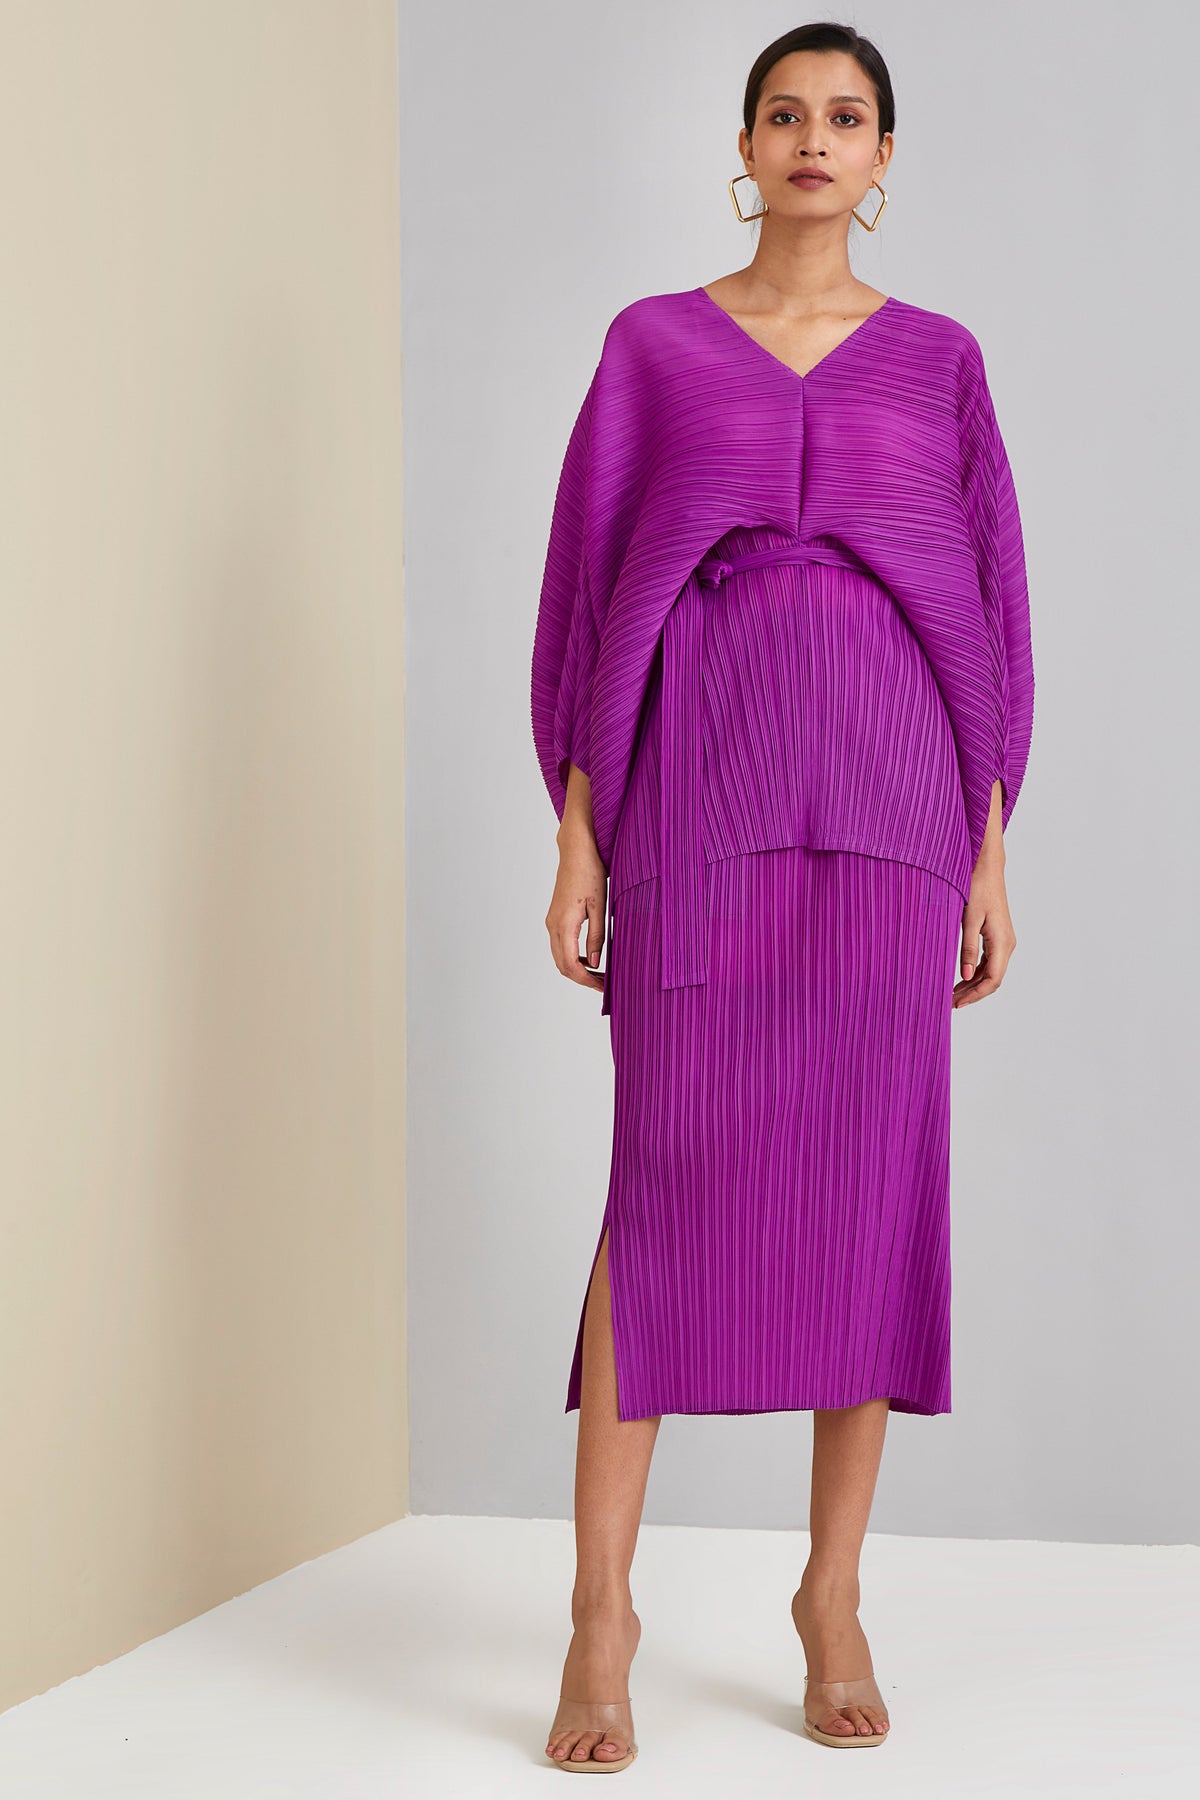 Aika Skirt Set - Bright Purple